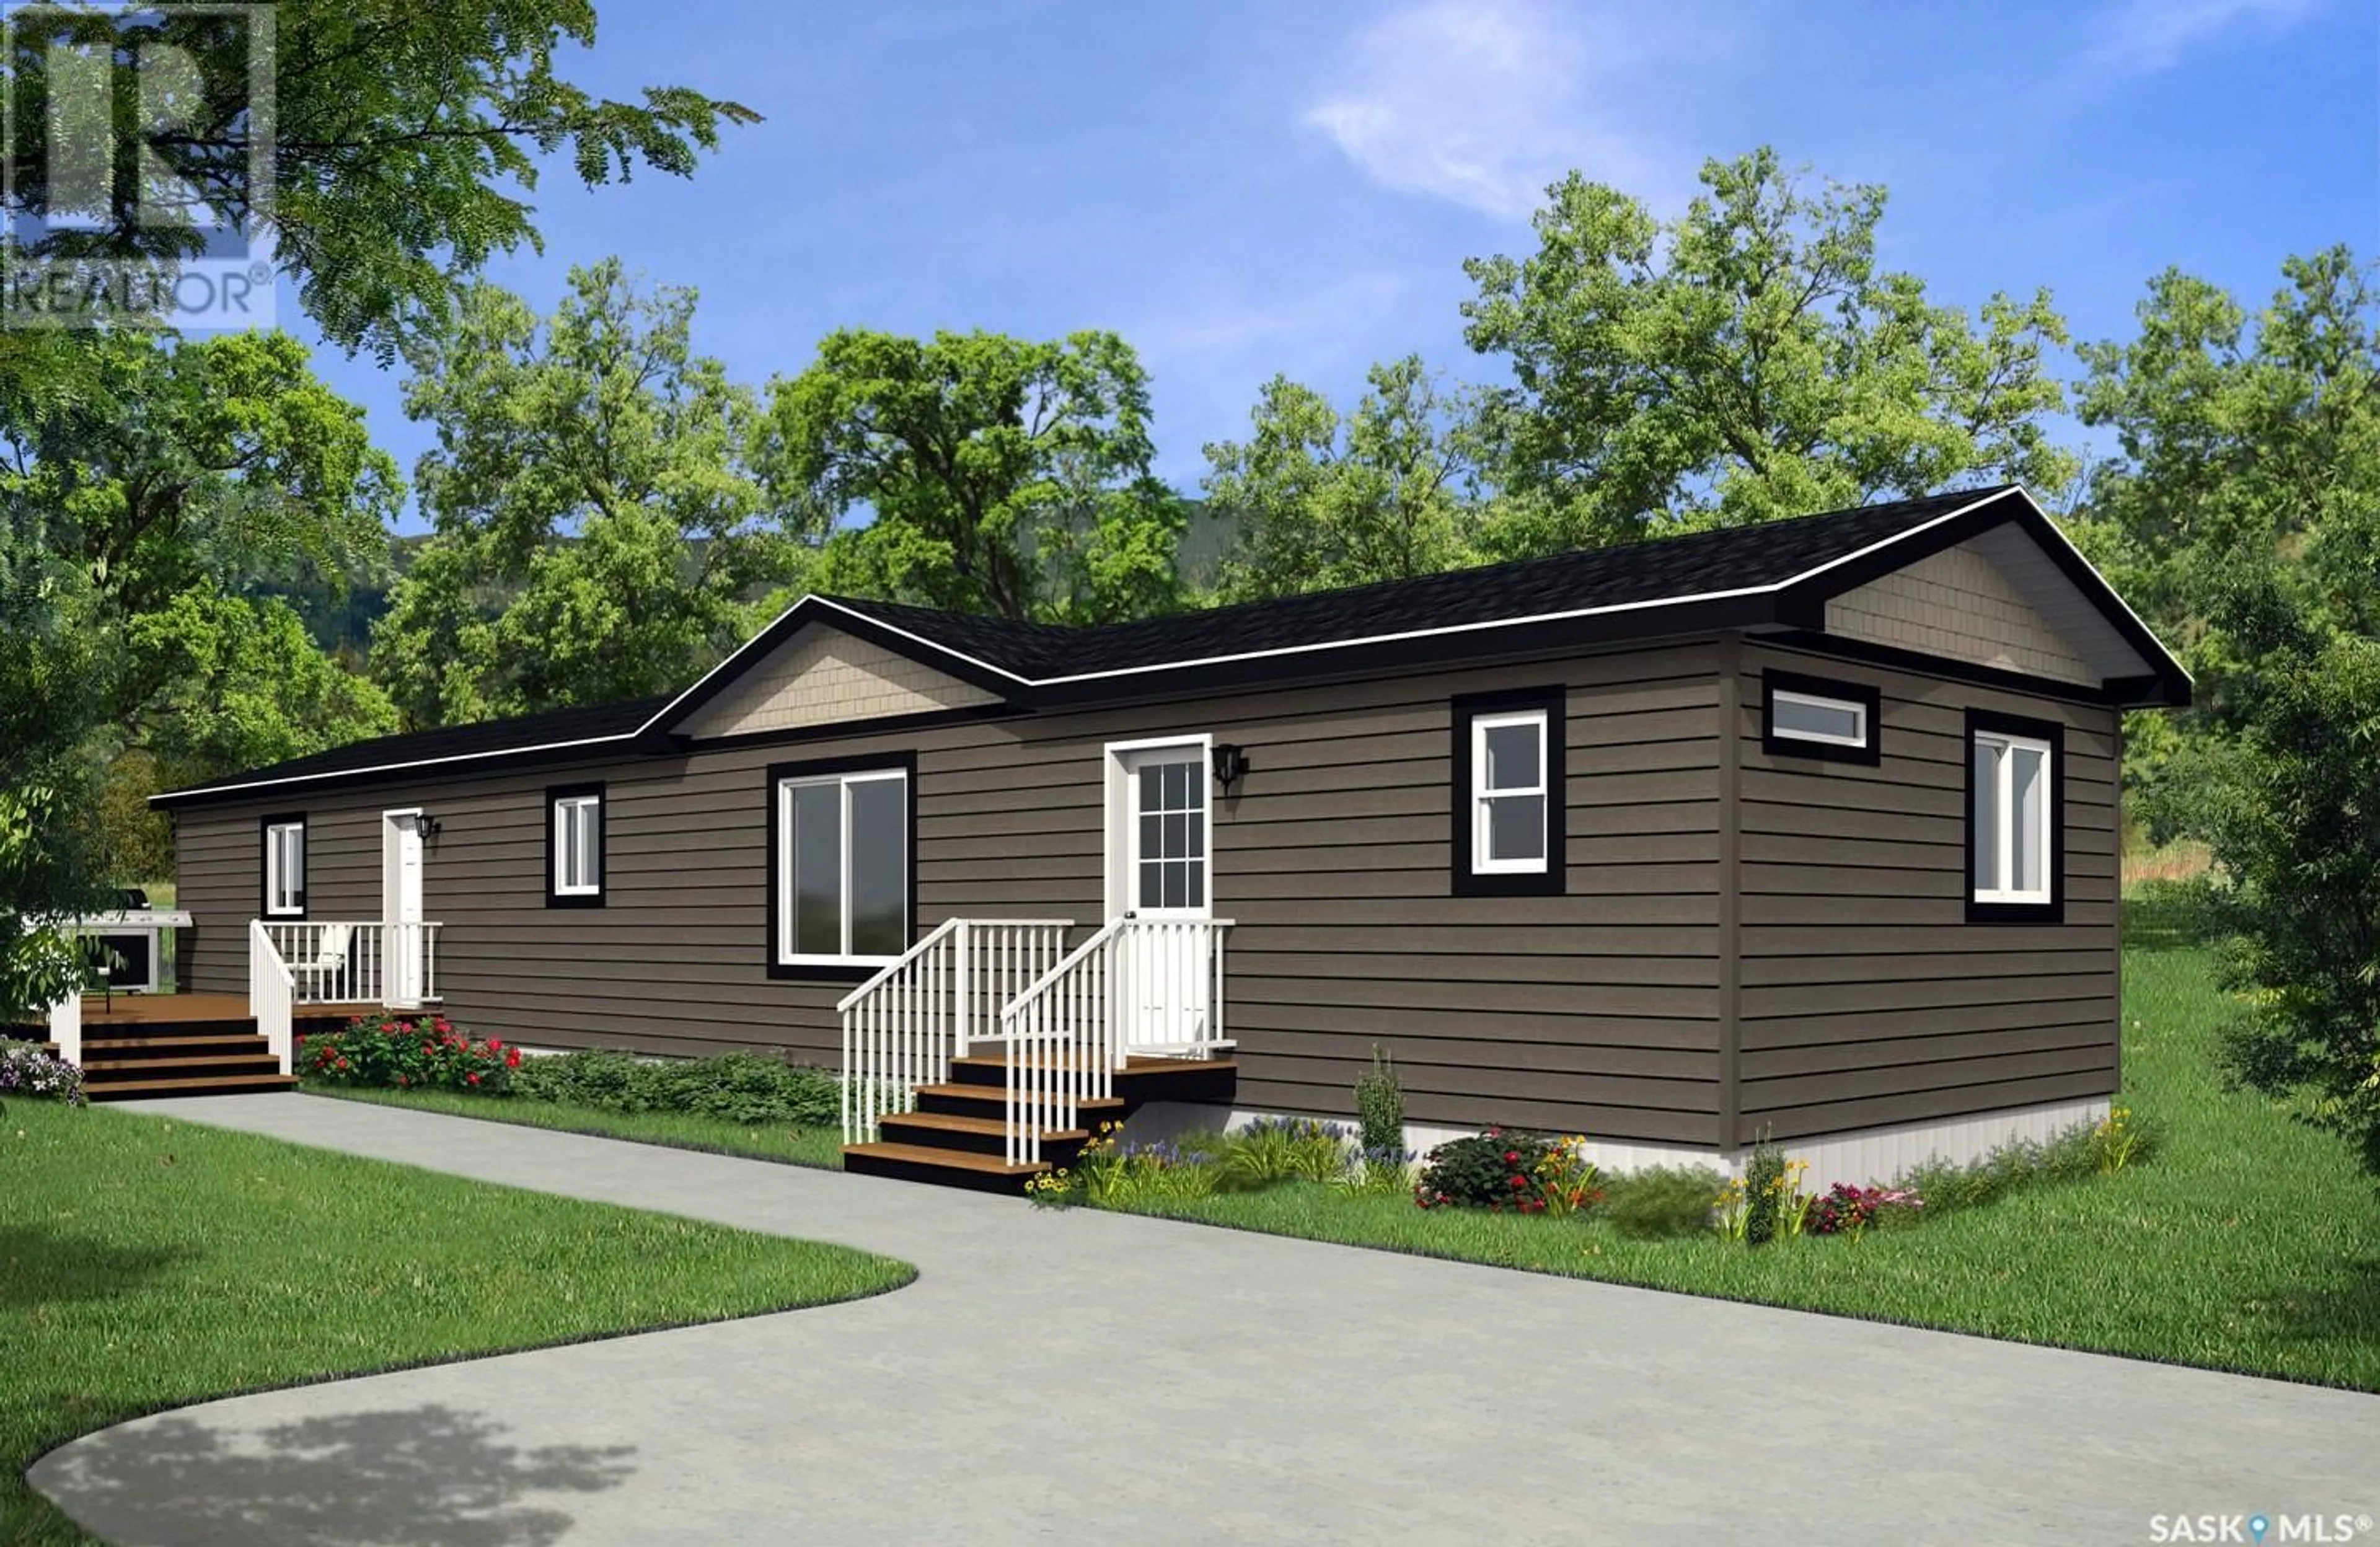 Home with vinyl exterior material for Unity Mobile Home & RV Park Ltd, Unity Saskatchewan S0K4L0